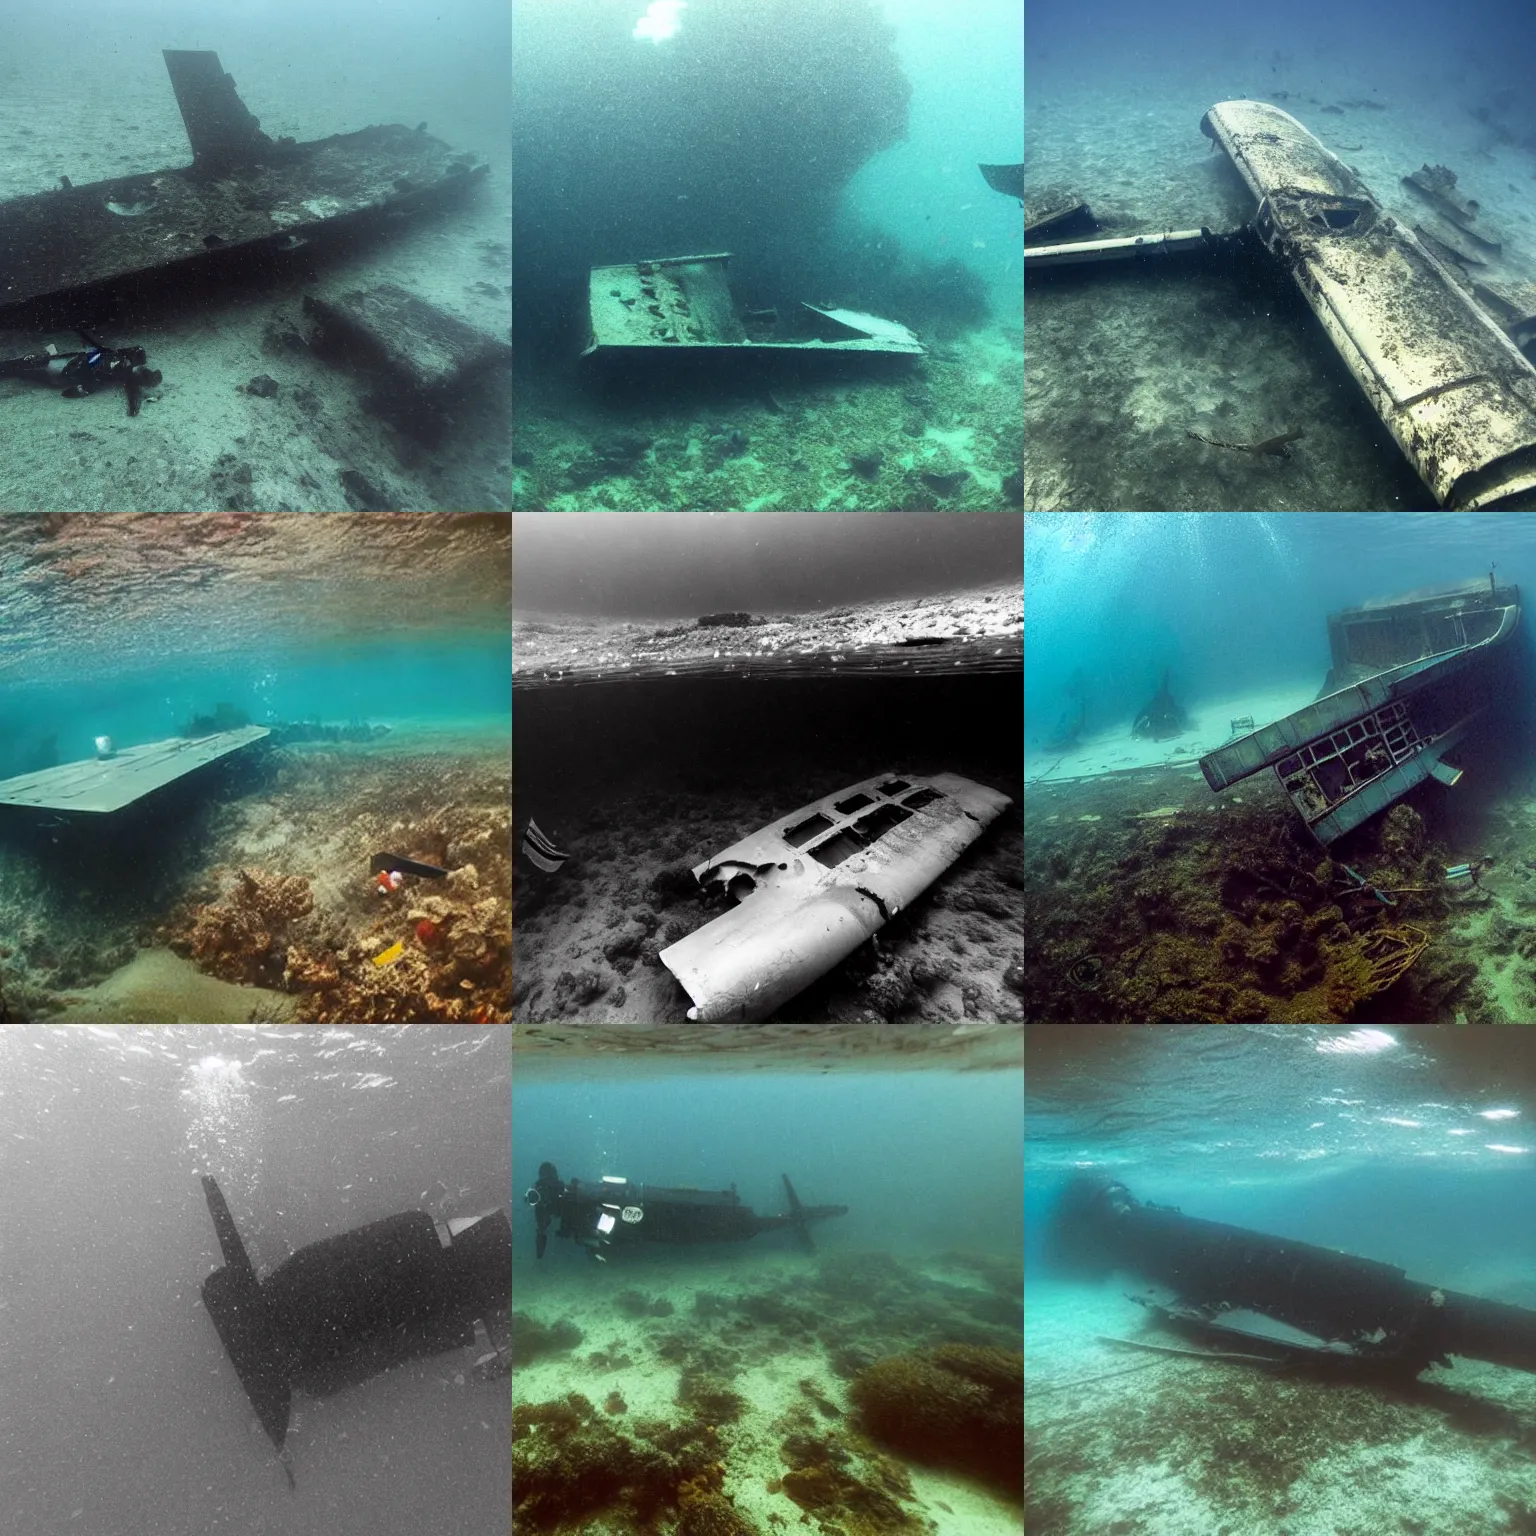 Prompt: underwater photo of crashed sunken plane